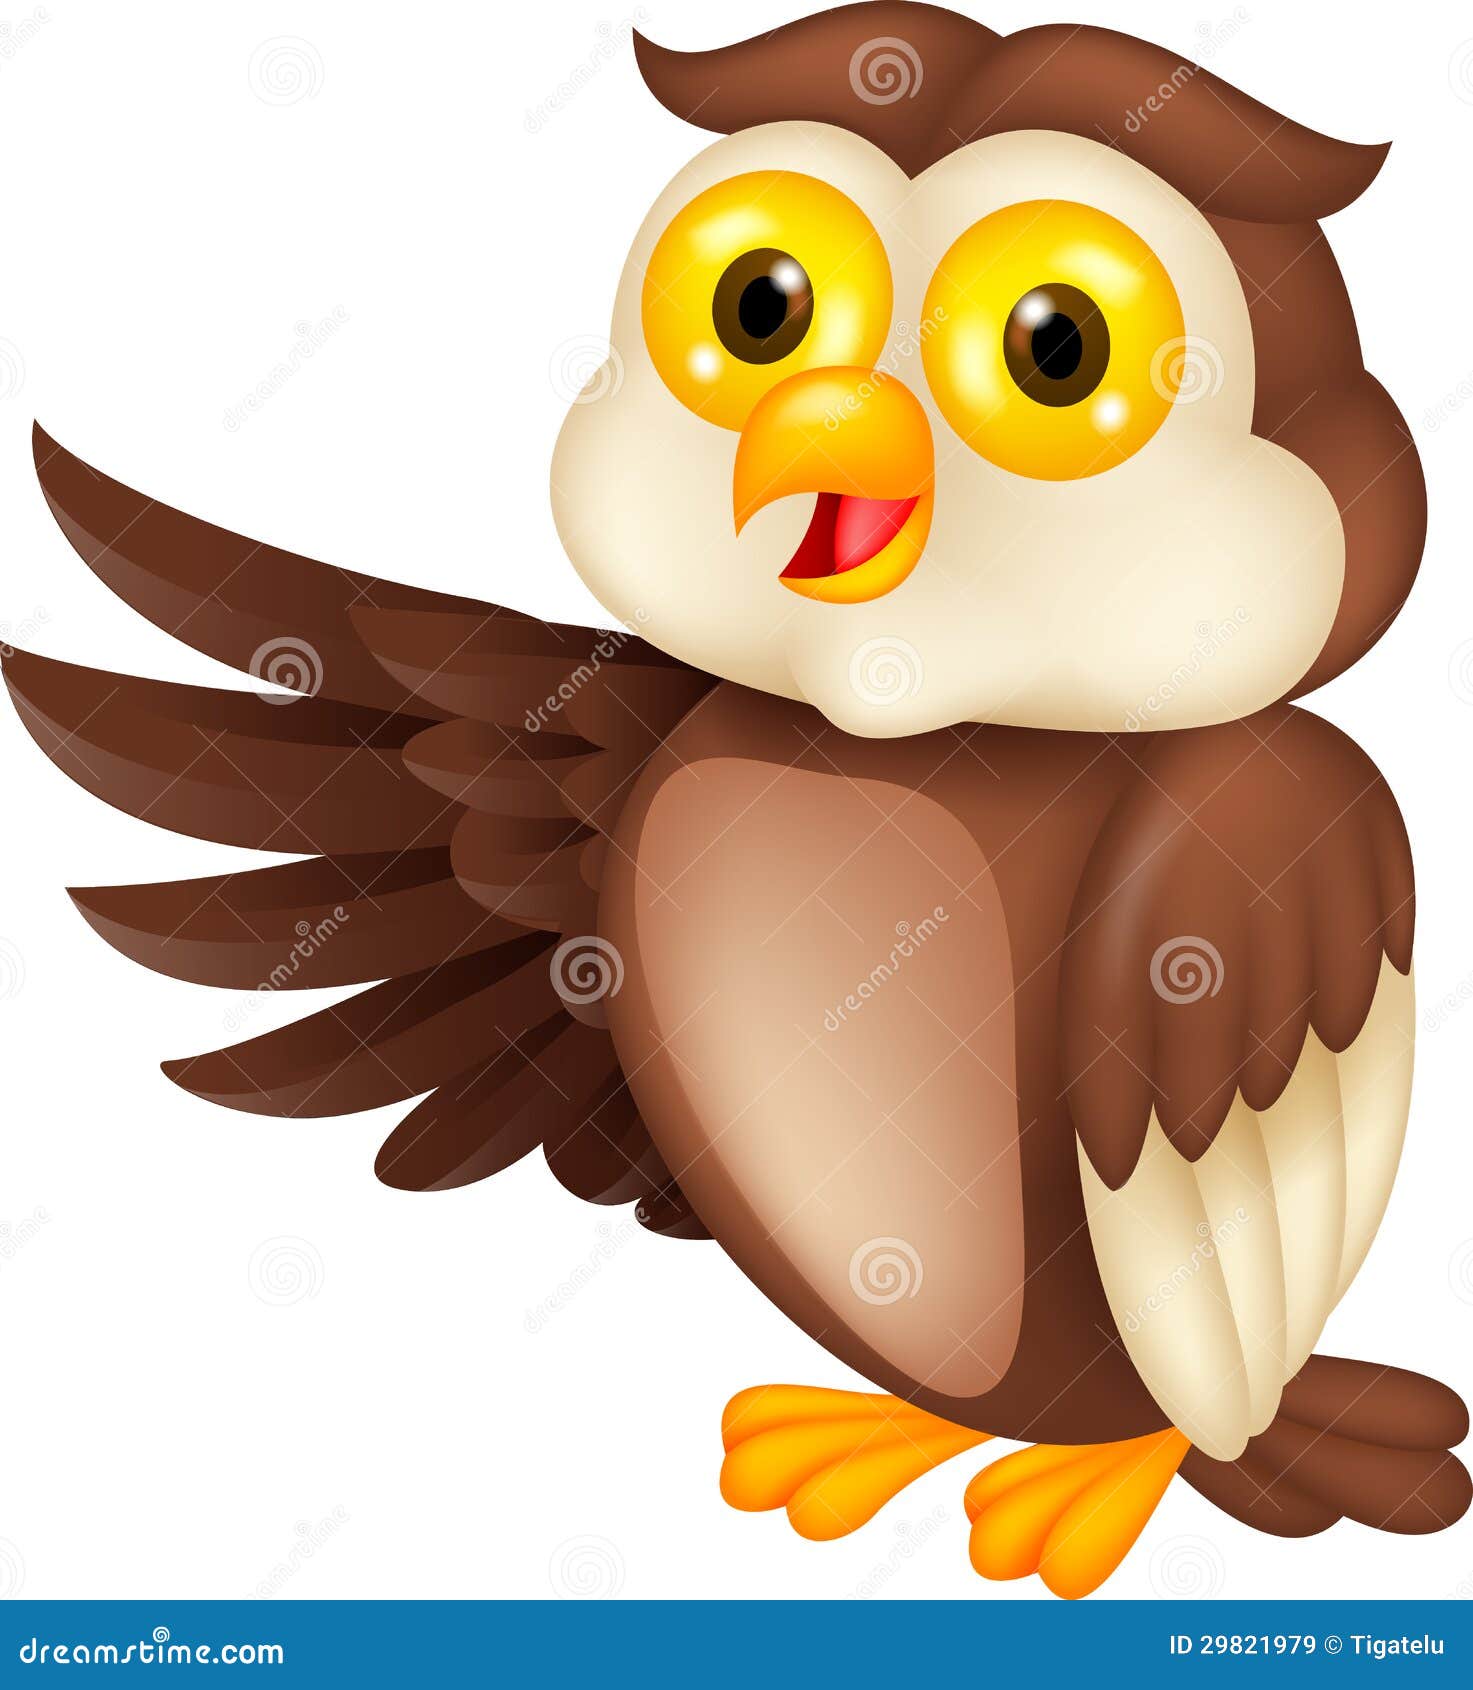 Funny Owl Cartoon Waving Royalty Free Stock Images - Image ...